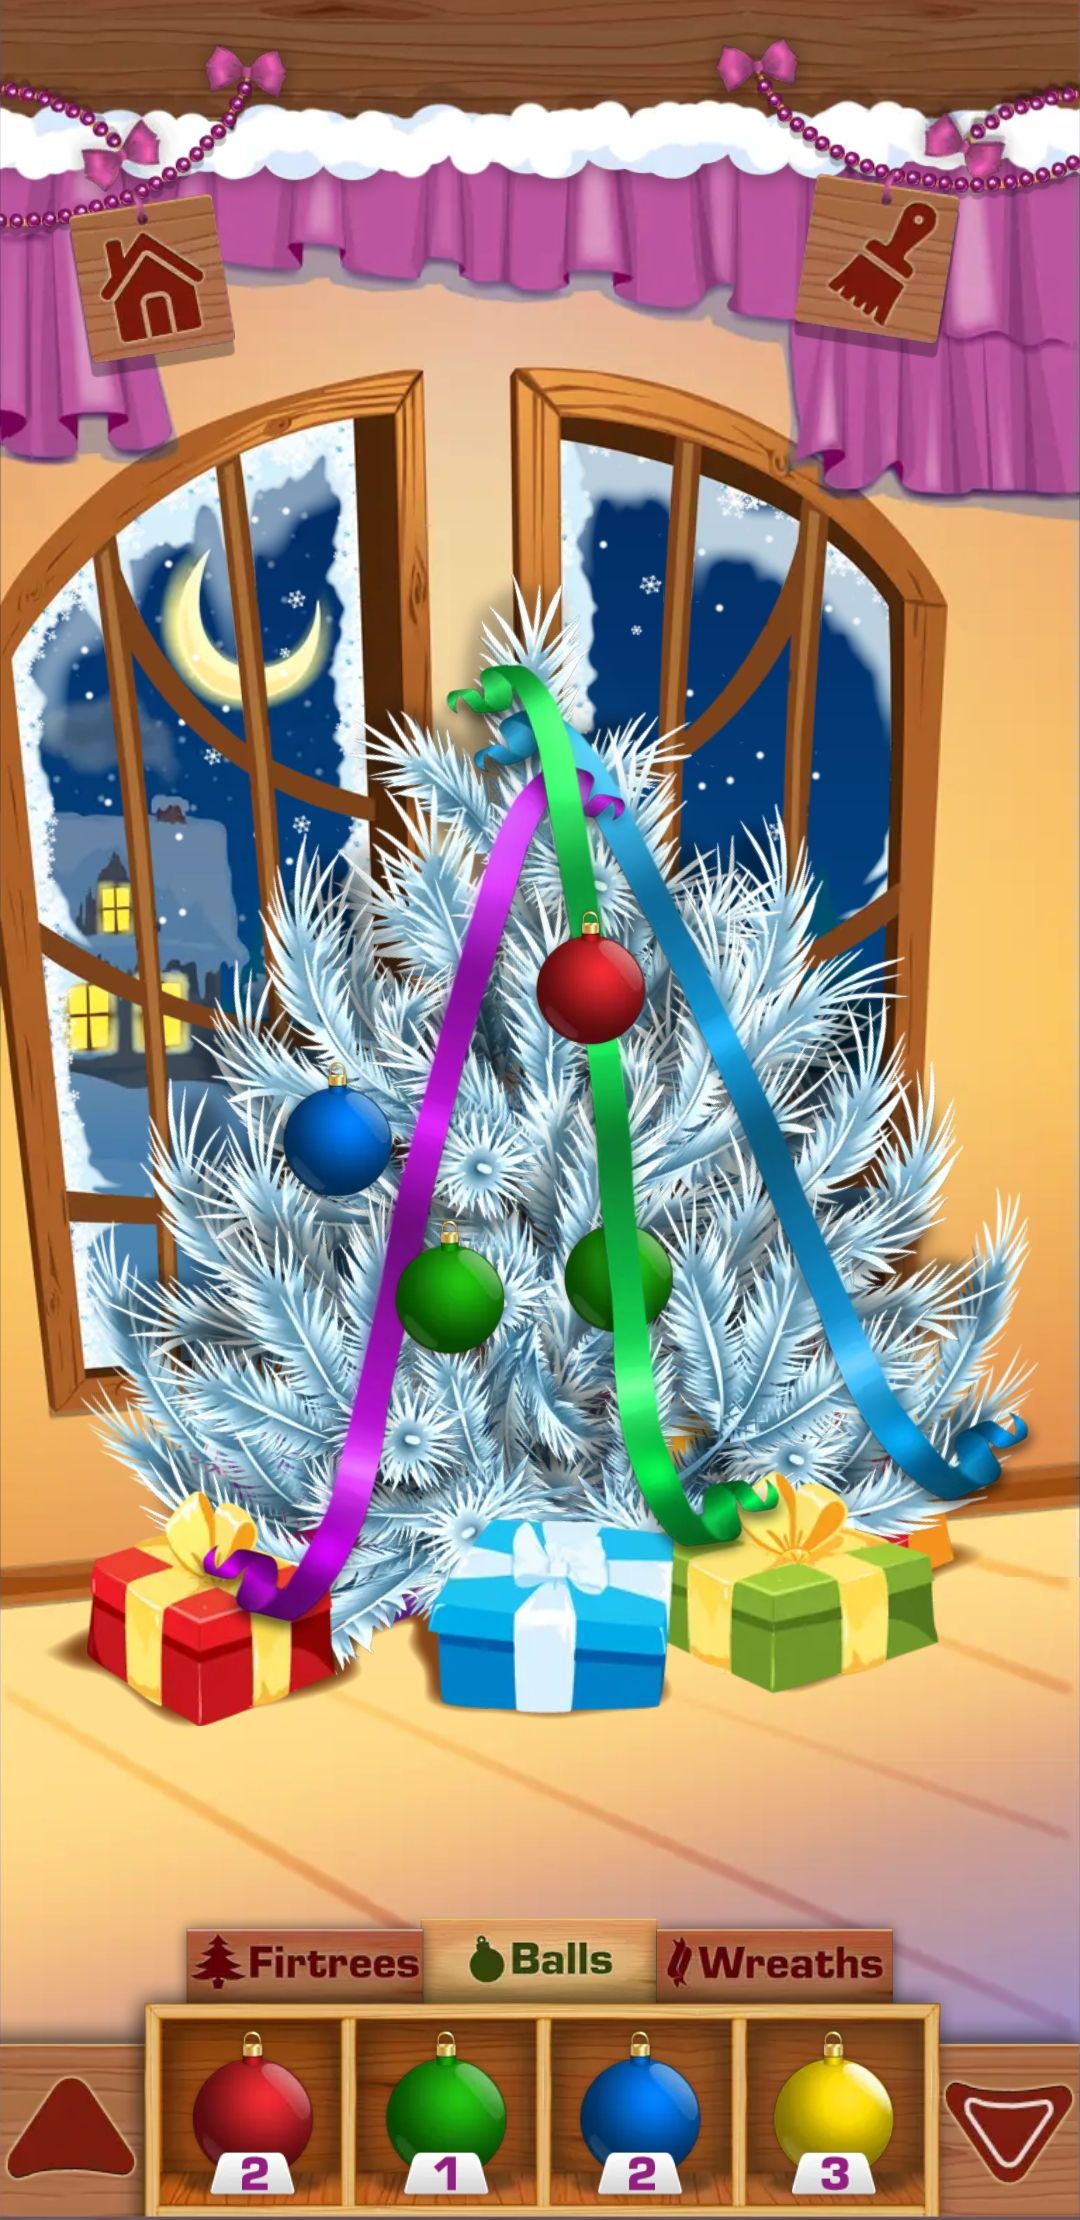 decorating christmas tree